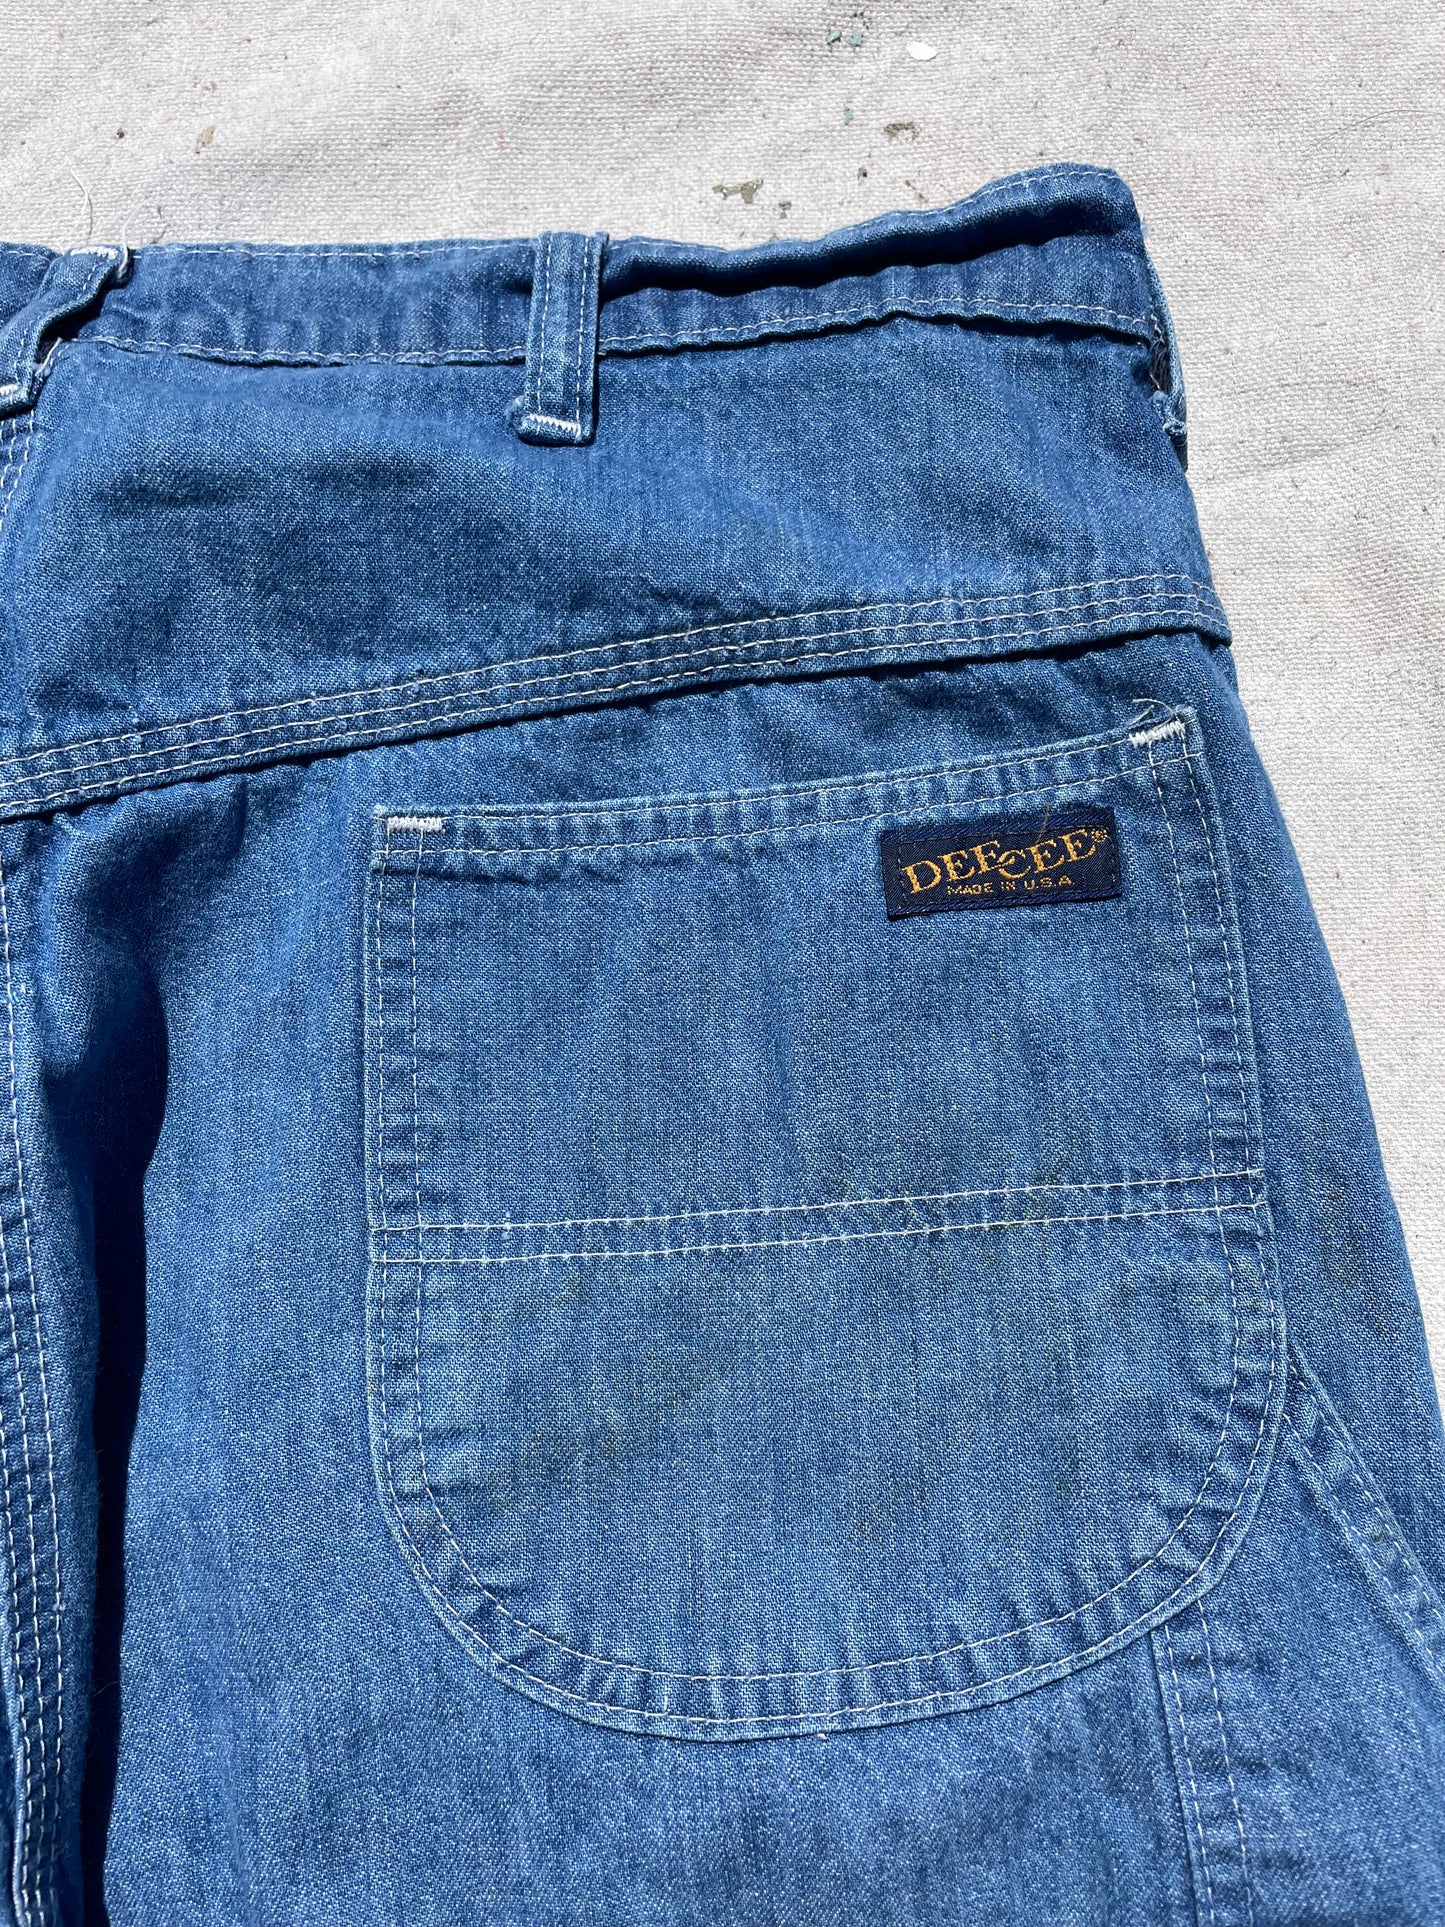 70s DeeCee Carpenter Utility Jeans